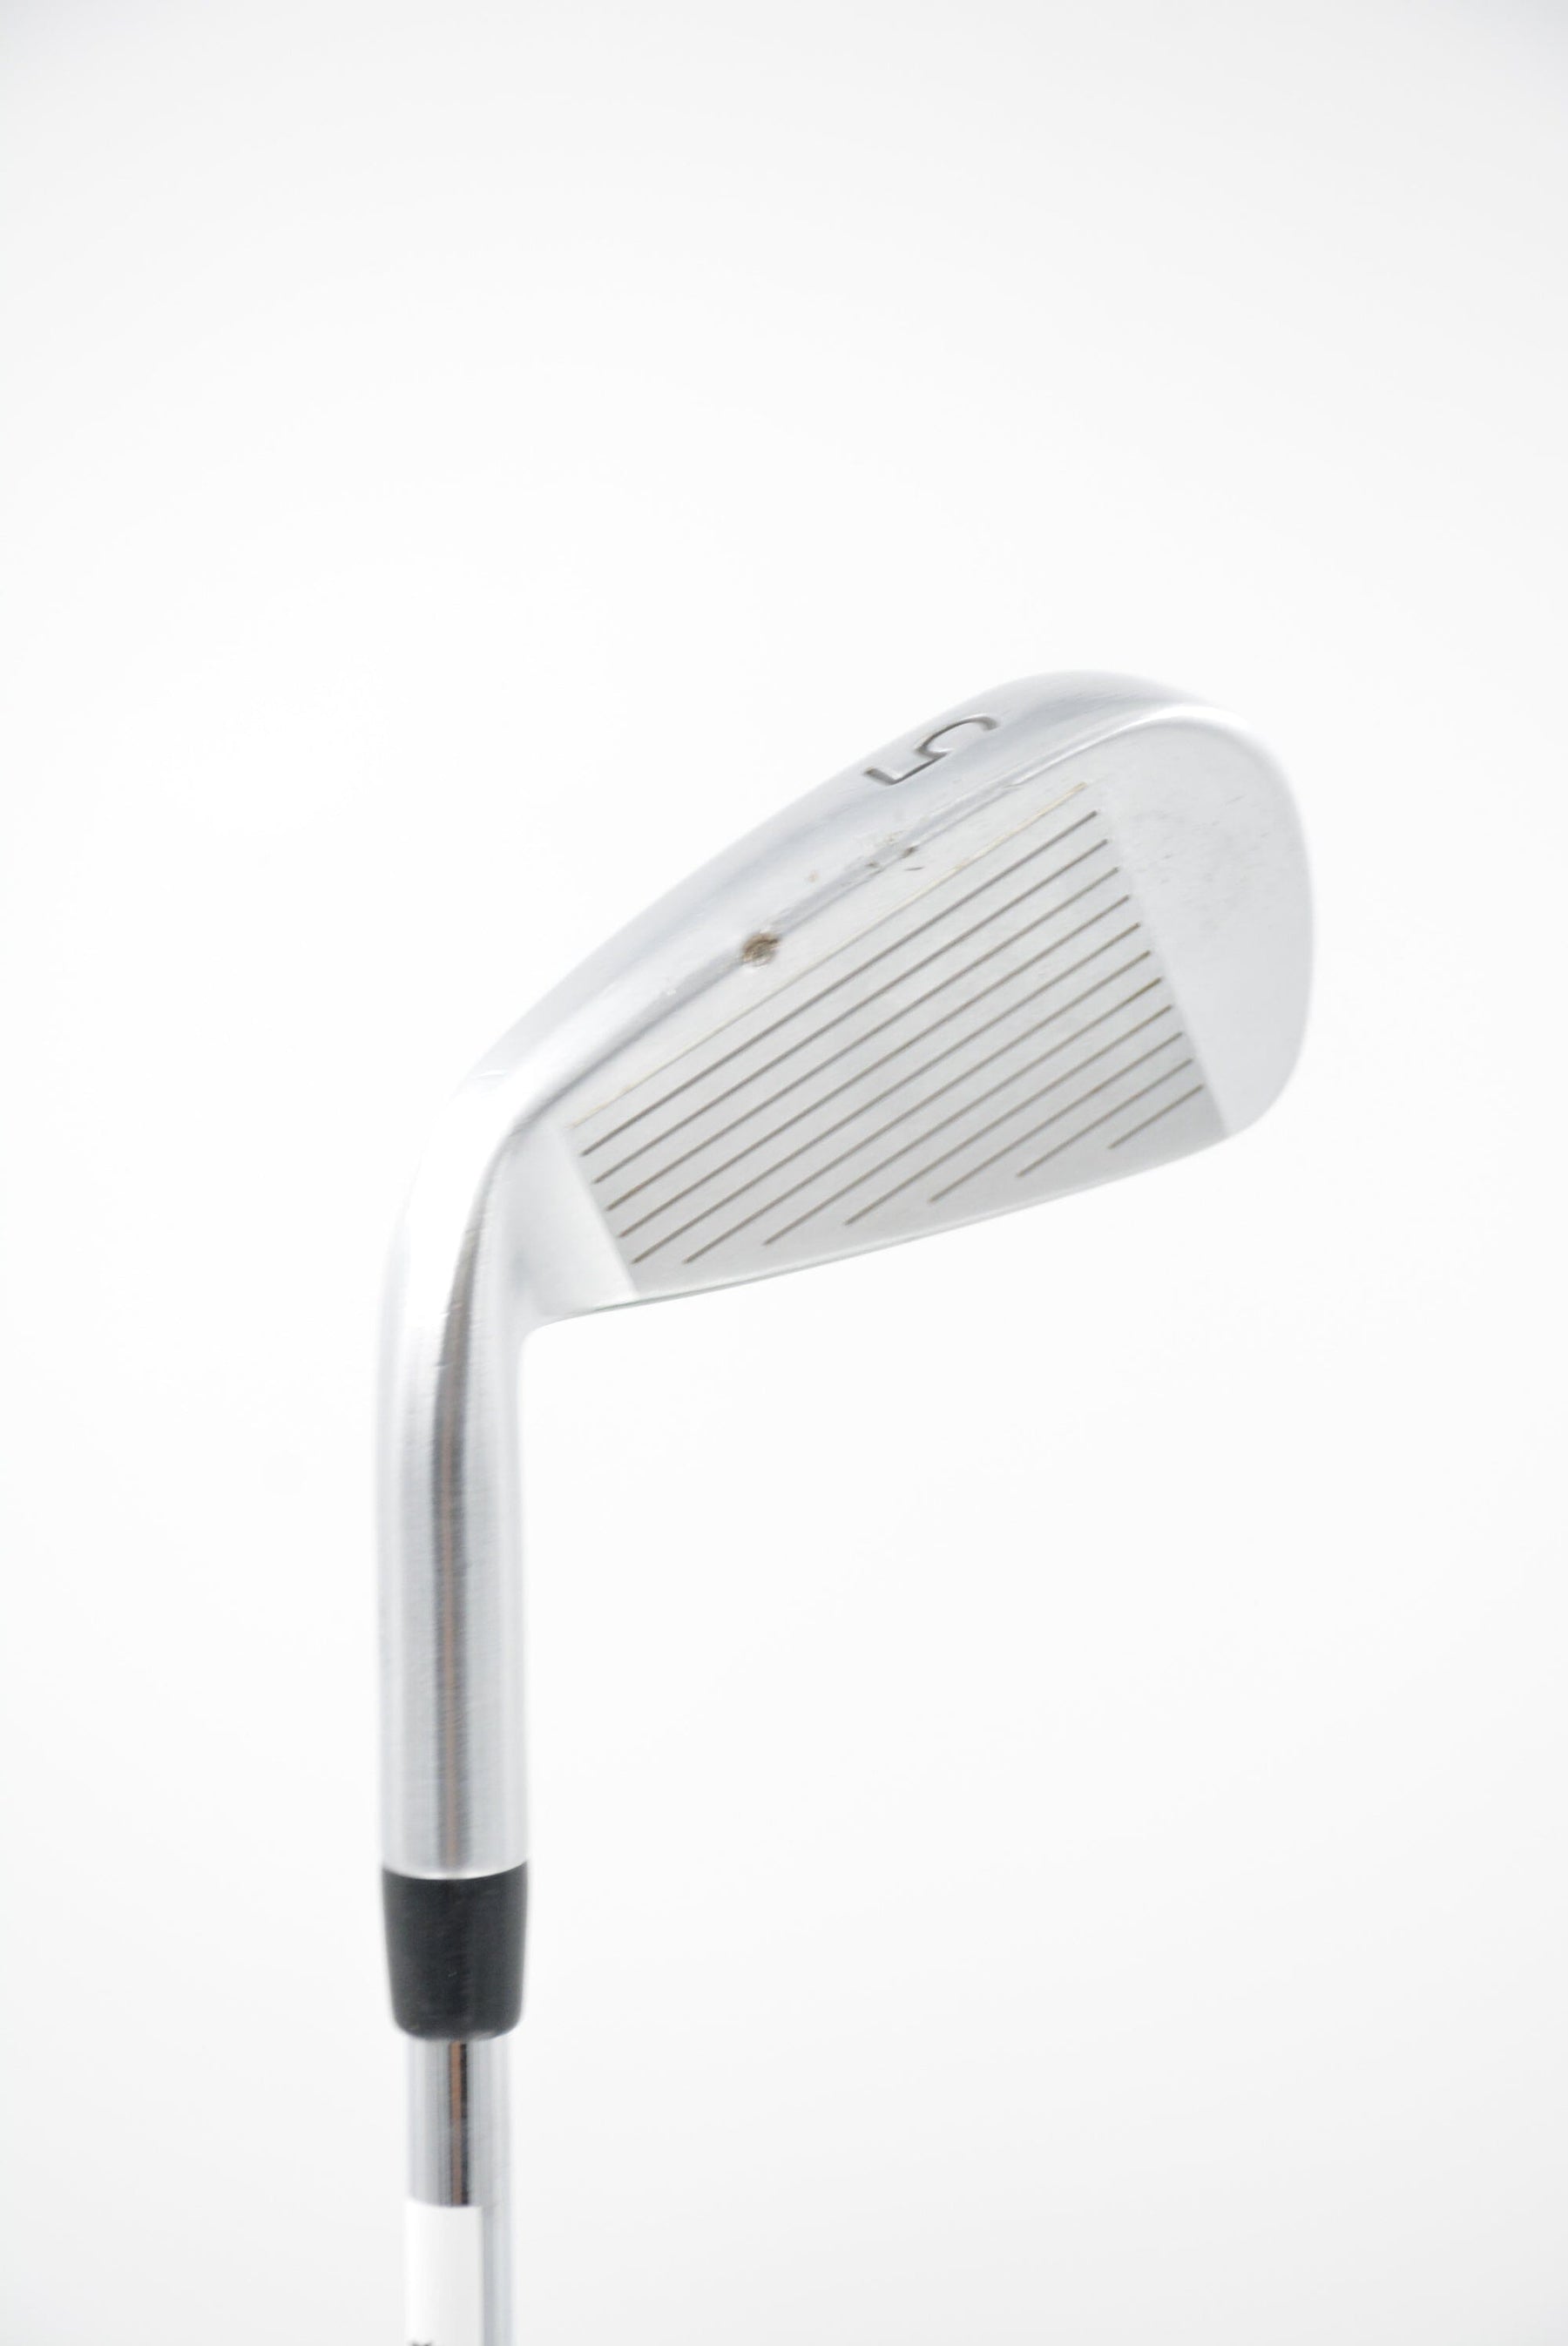 PXG 0311XF 5 Iron S Flex +0.75" Golf Clubs GolfRoots 